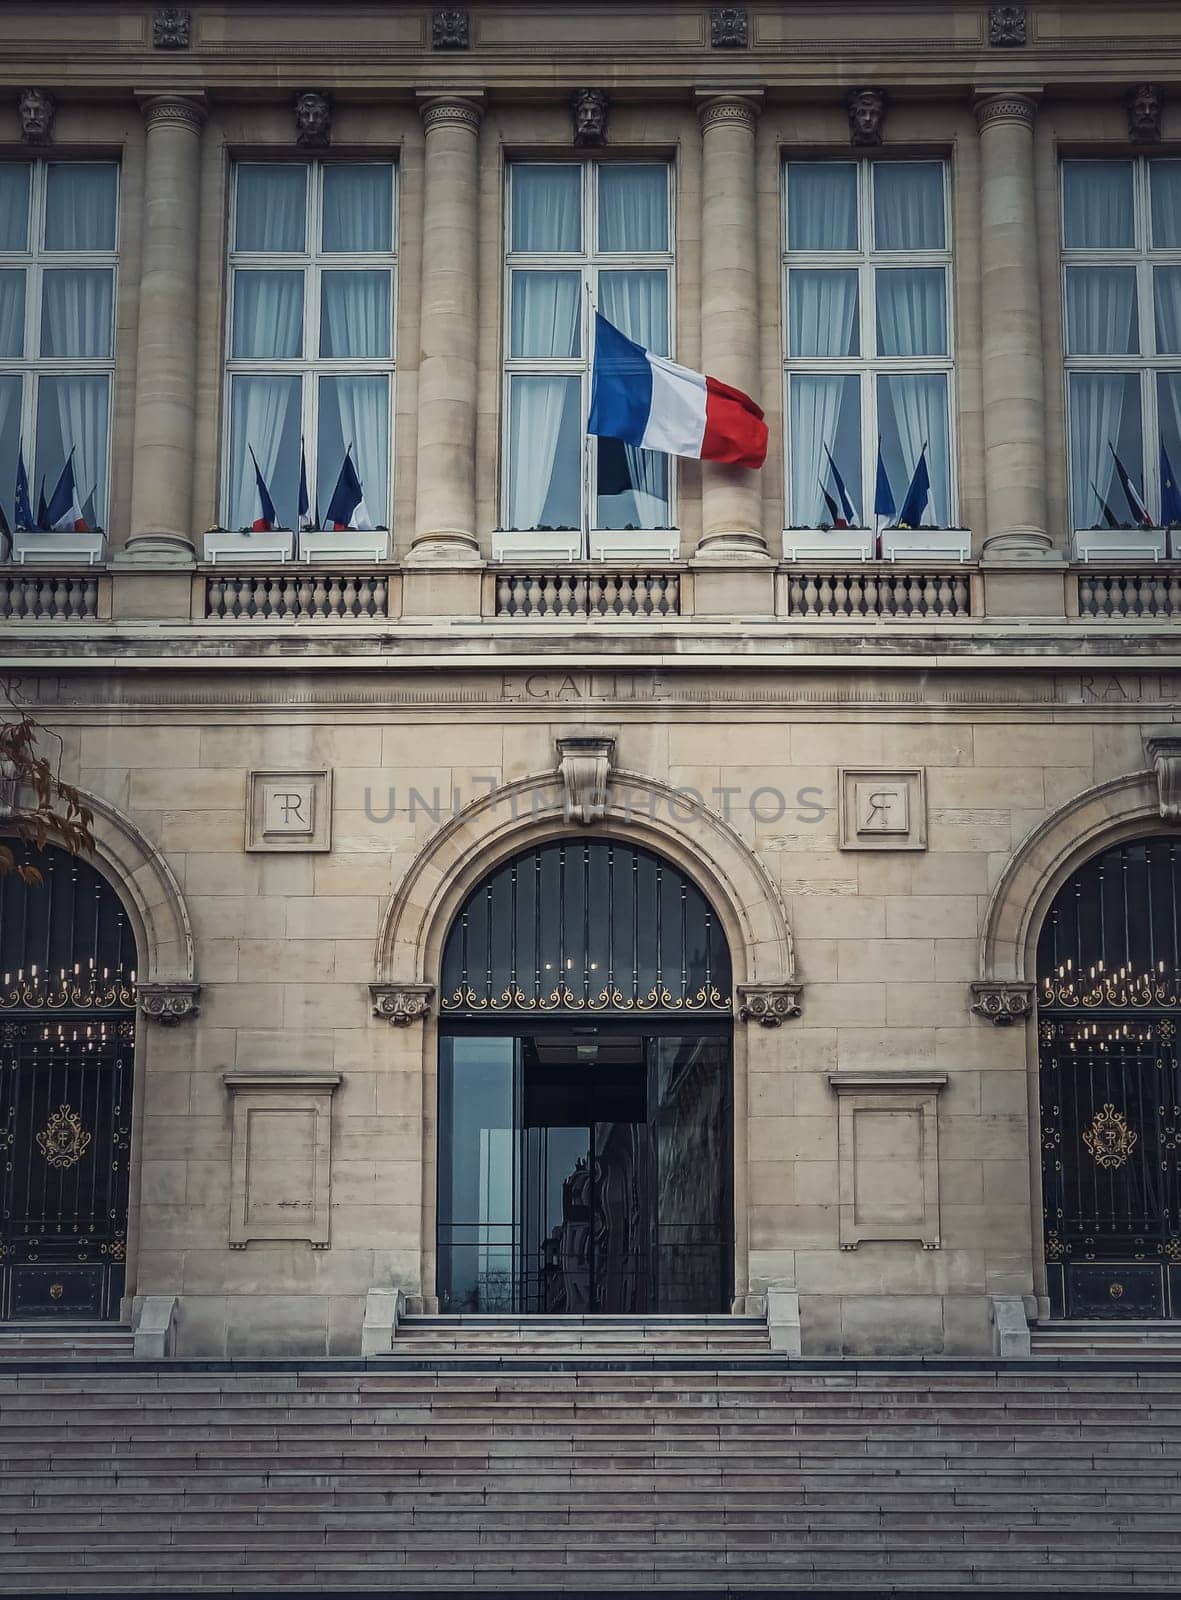 City Hall of Asnieres northwestern suburb of Paris, France. Asnières-sur-Seine mairie outdoors facade view
